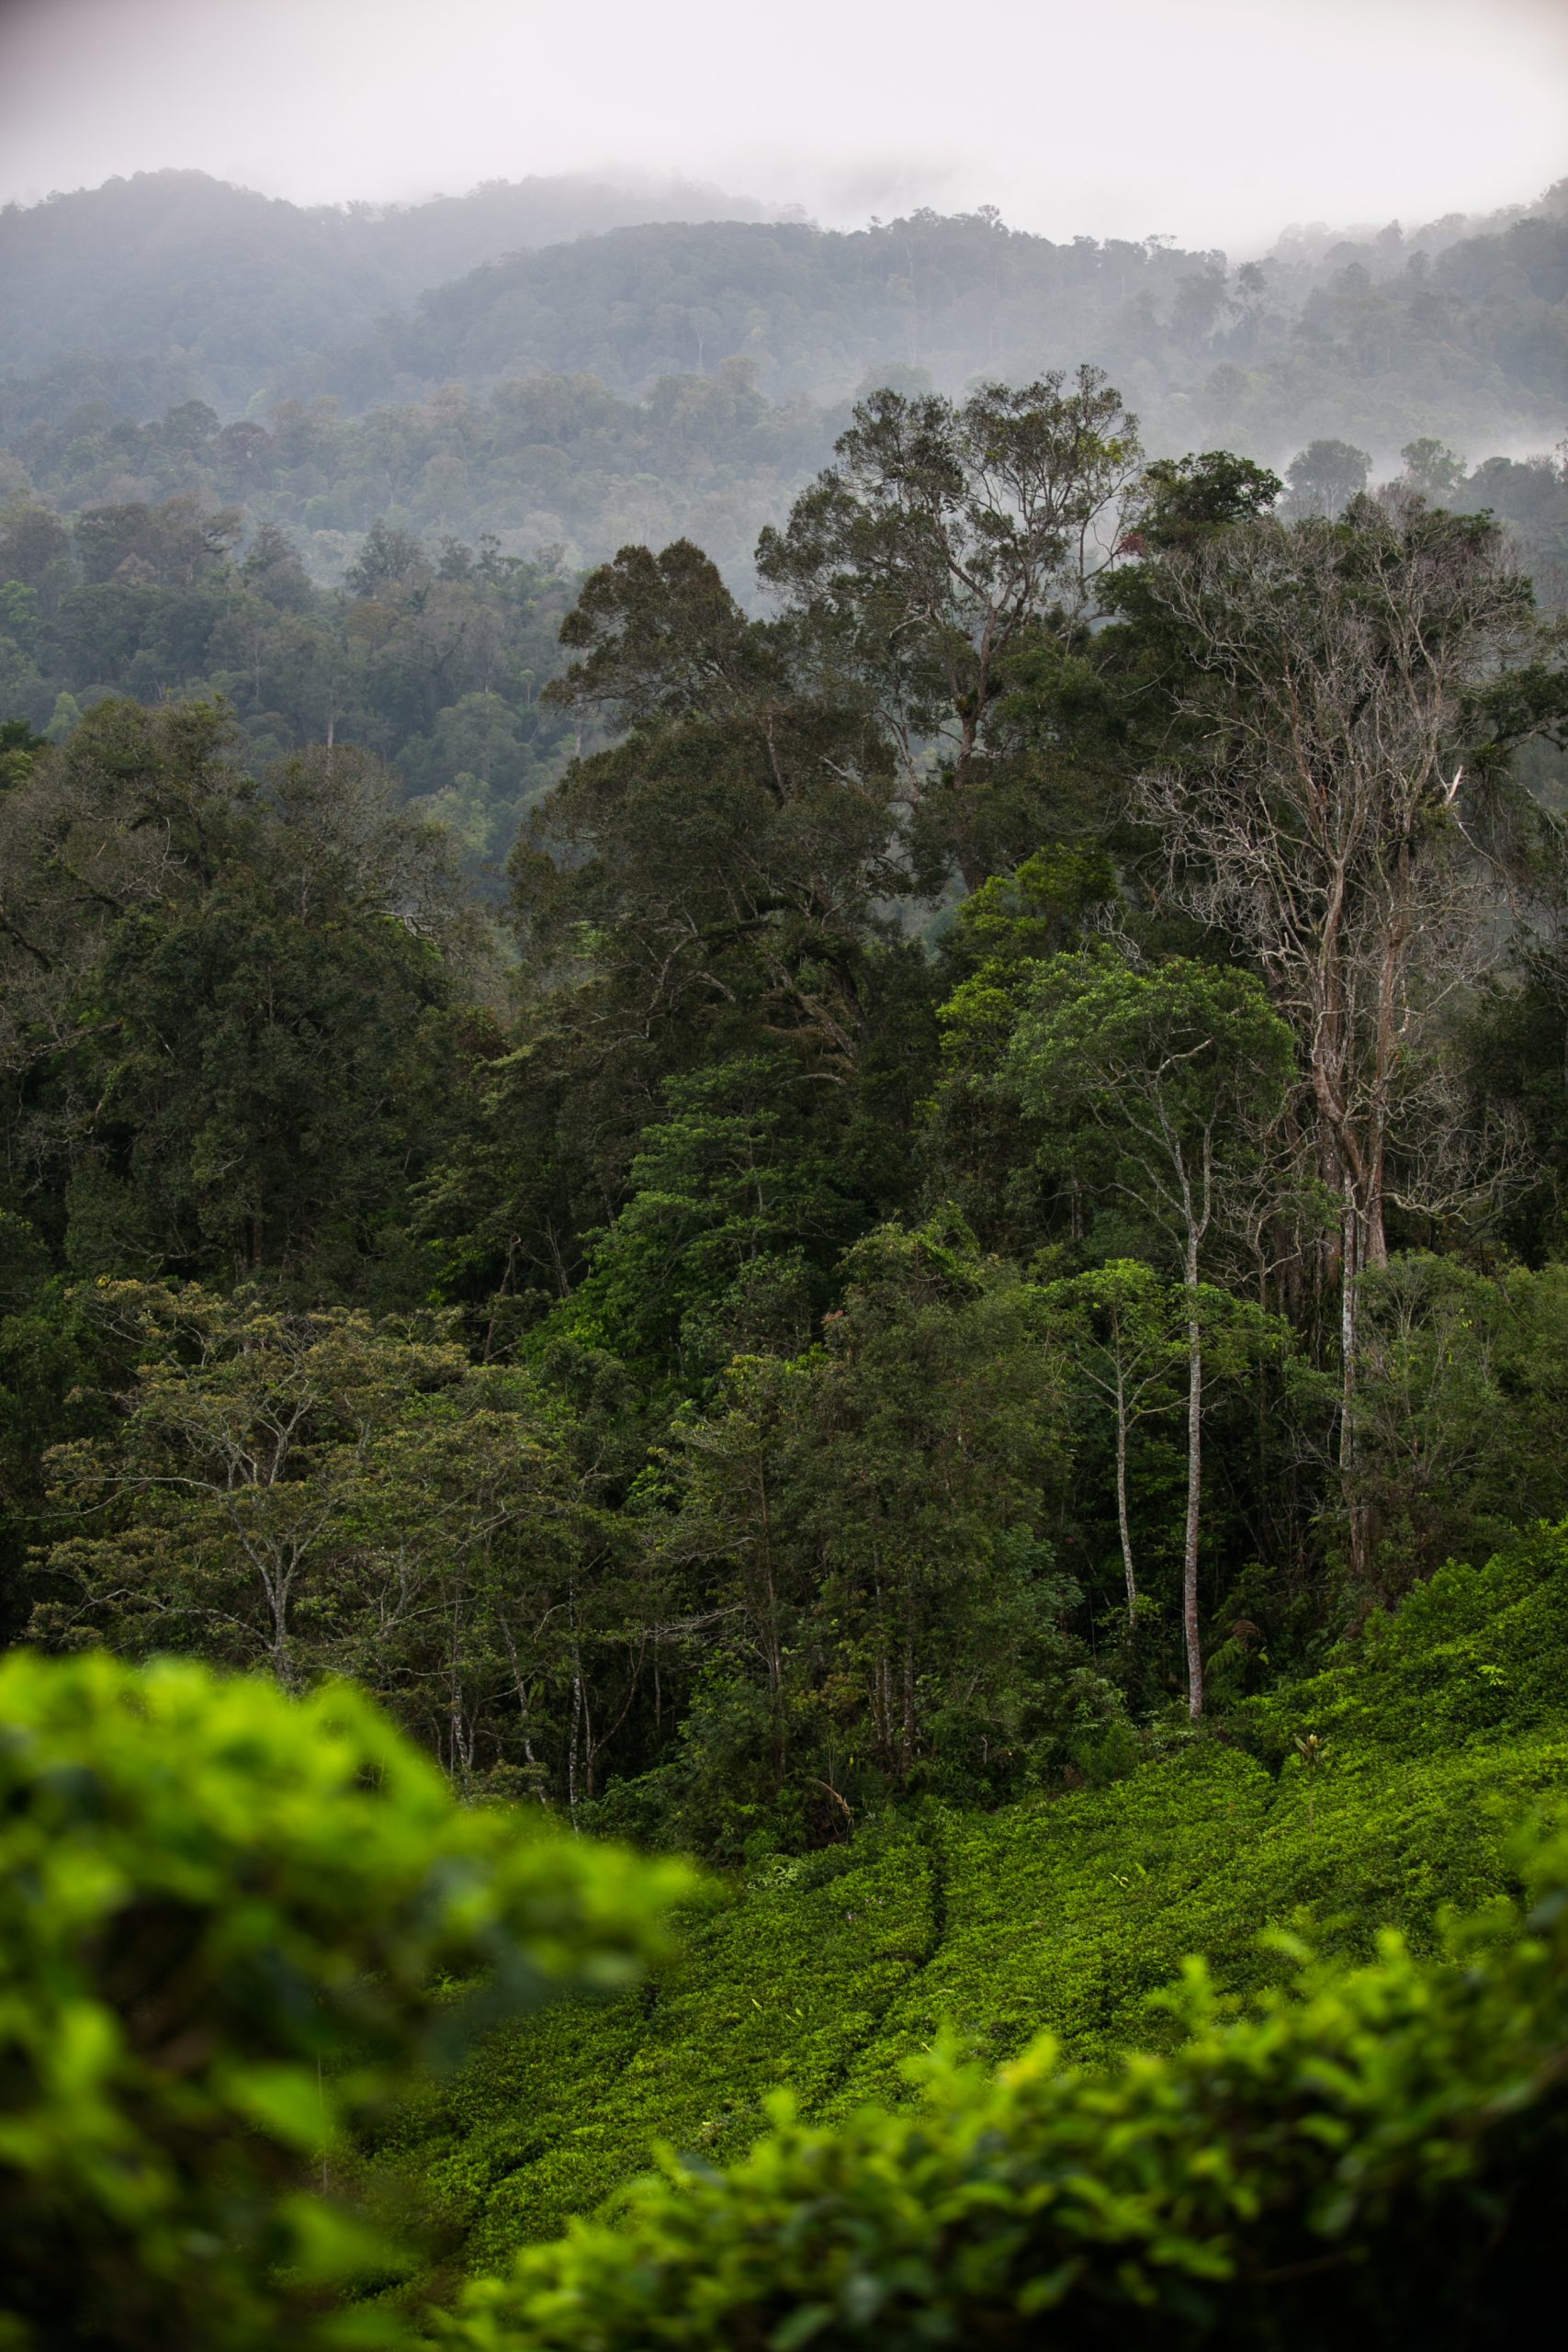 A tea plantation in Indonesia